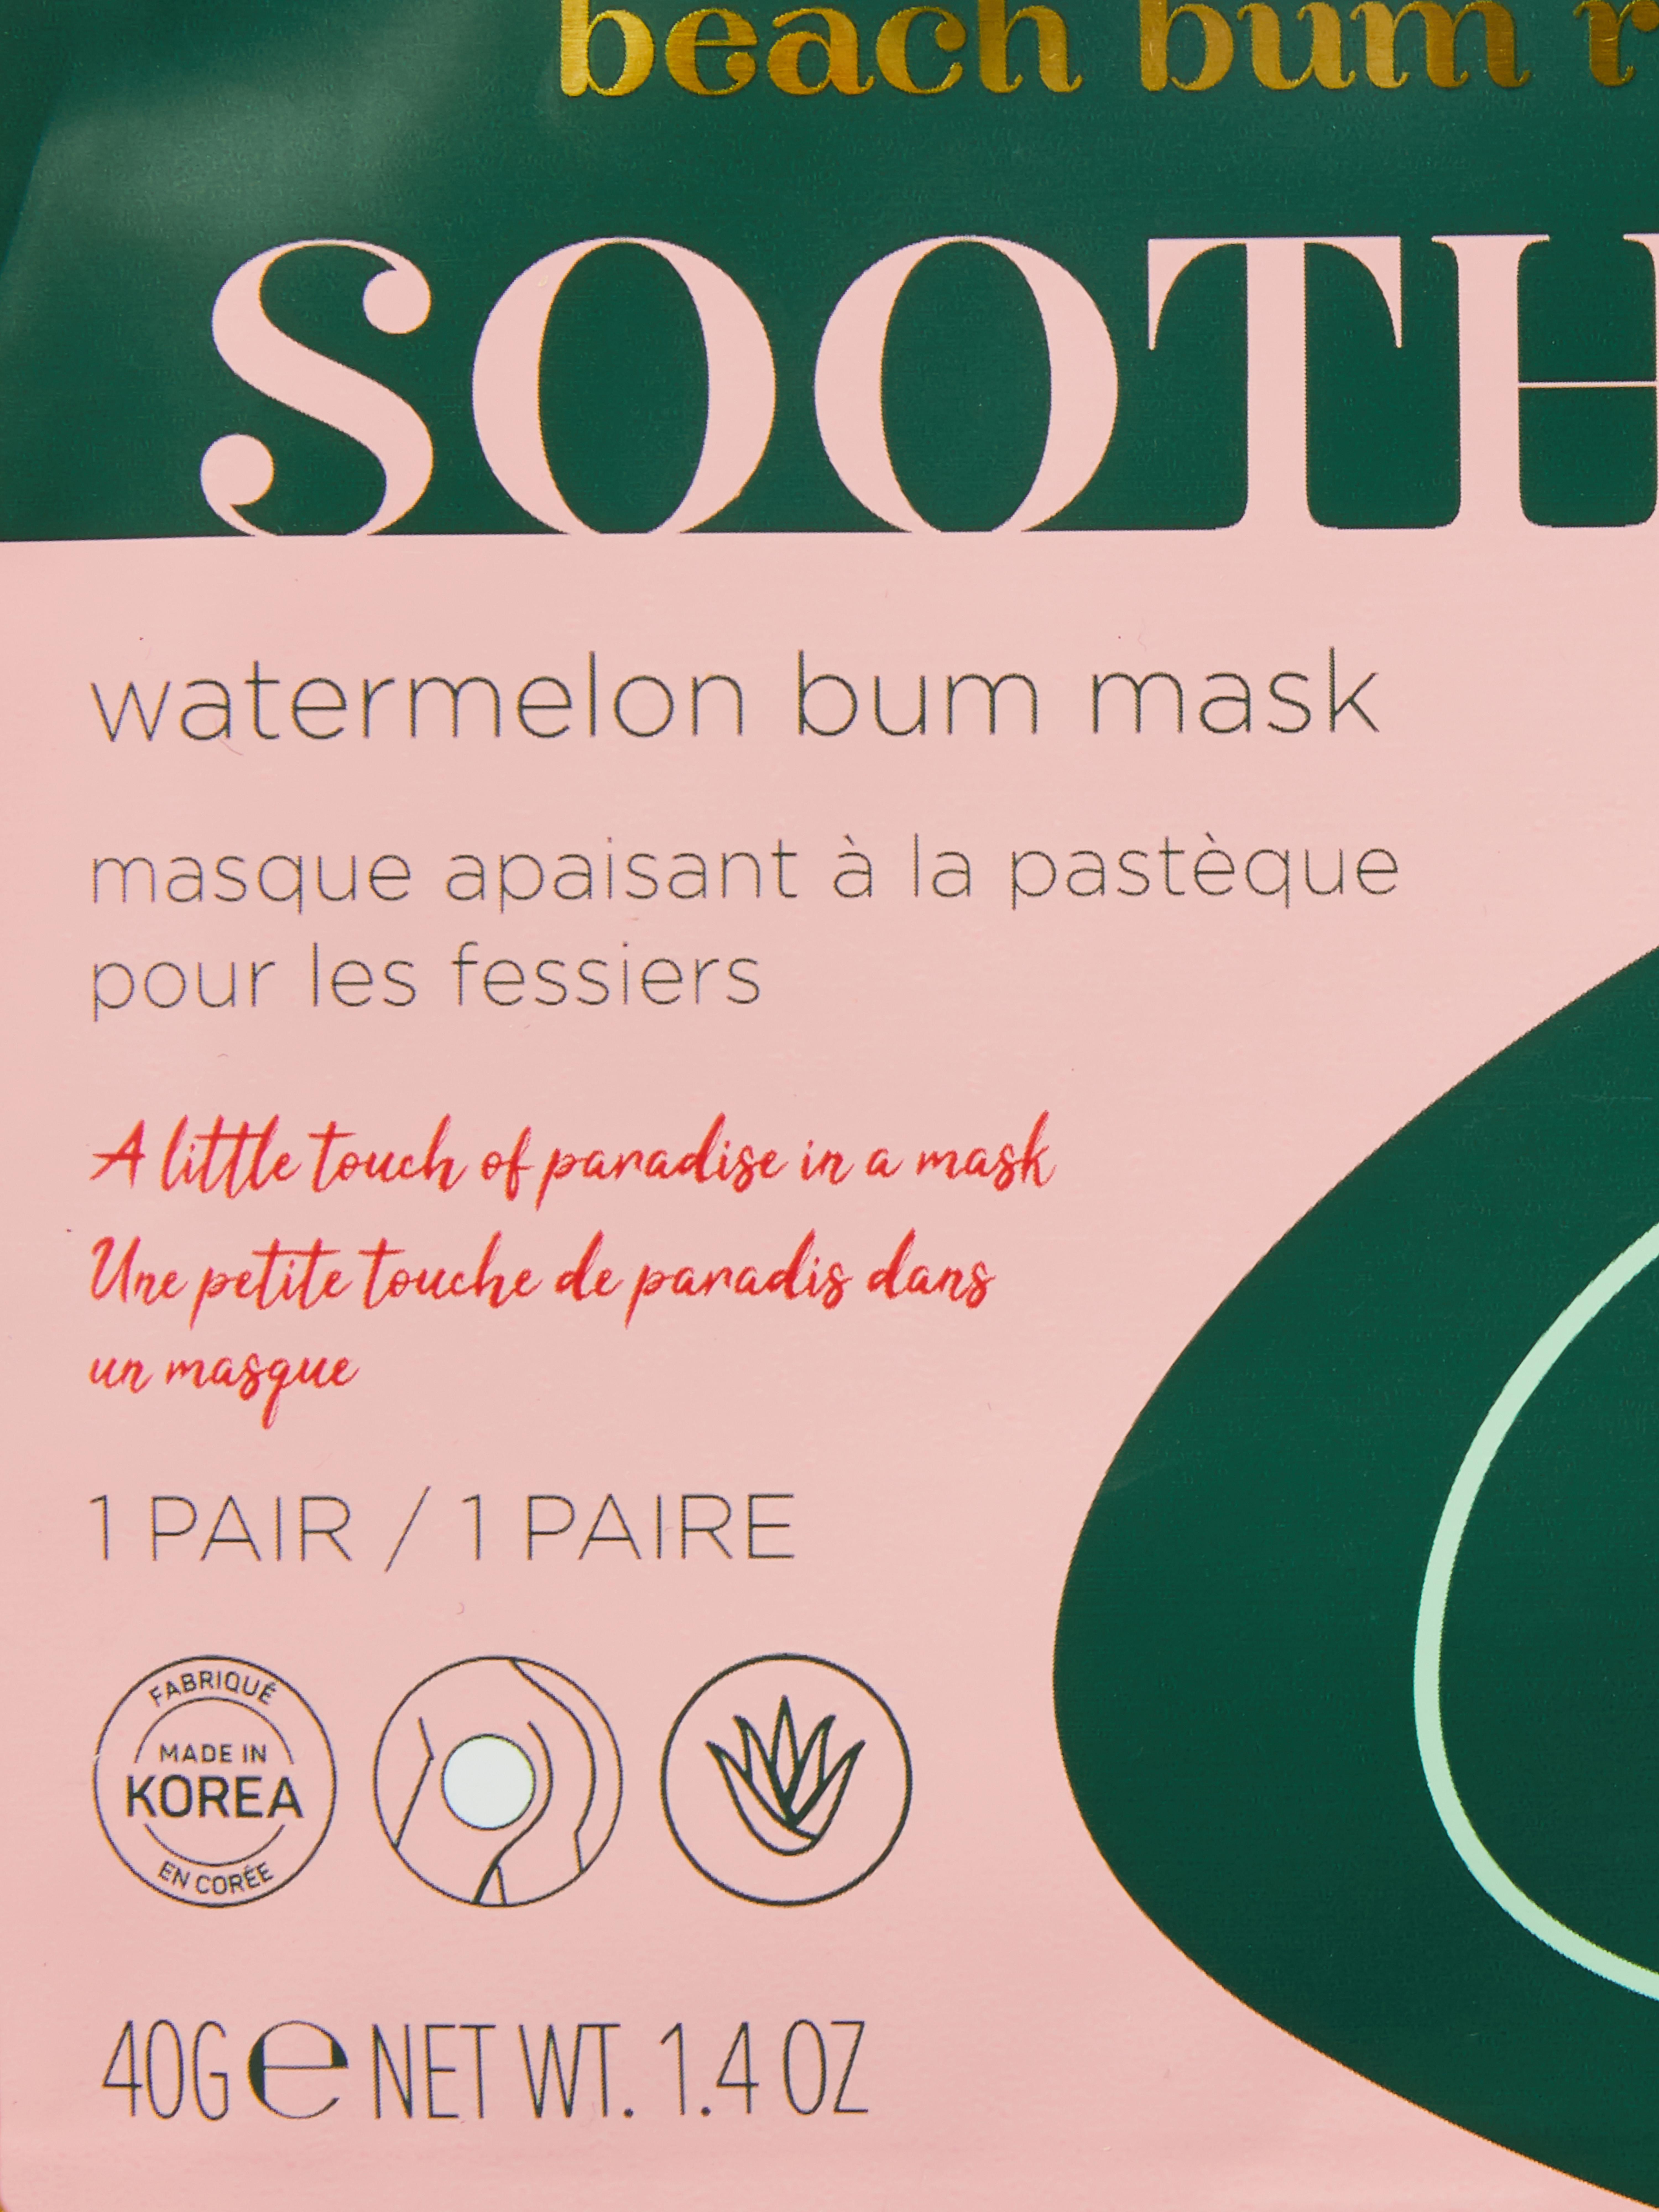 PS... Watermelon Bum Mask